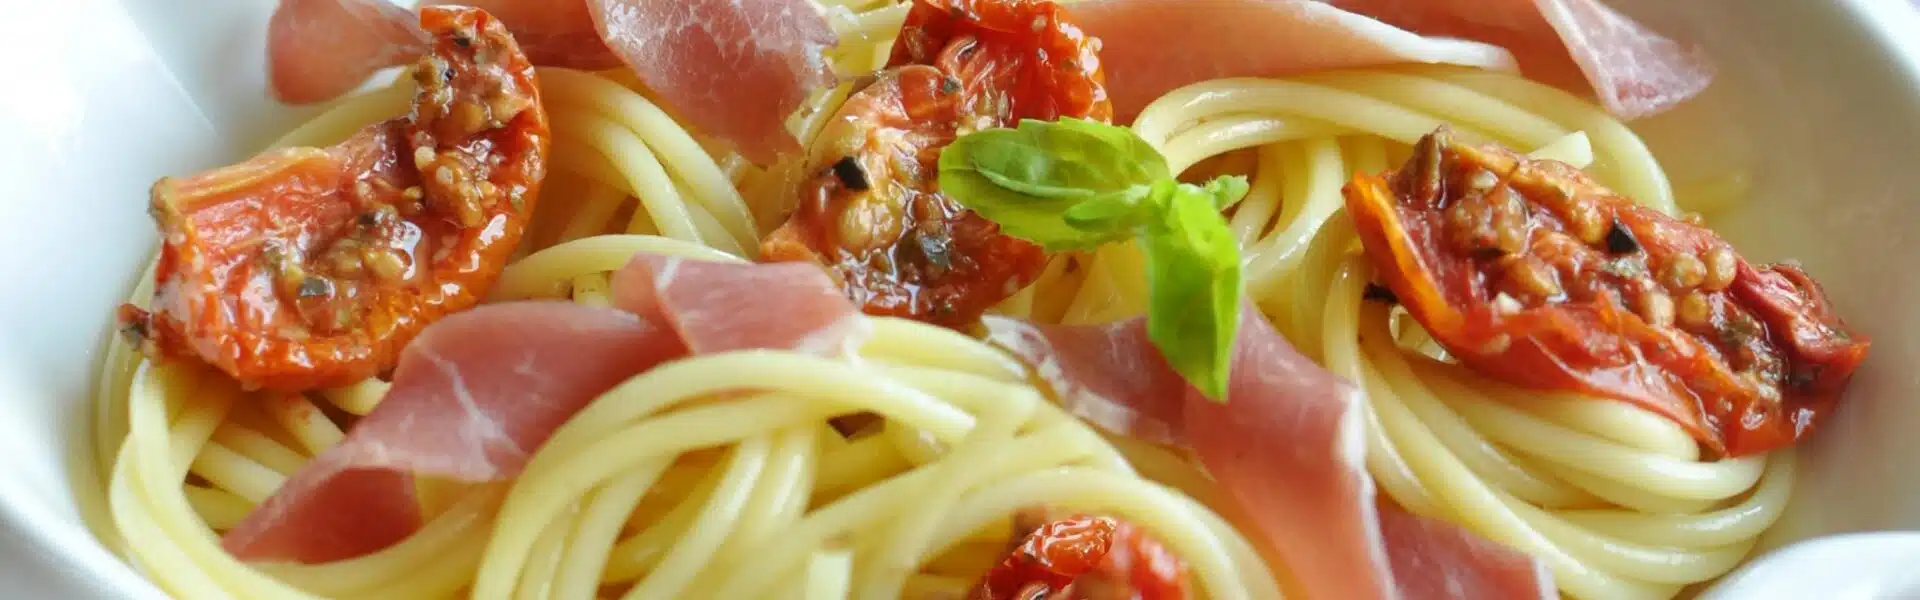 Spaghettis aux tomates rôties - 3145